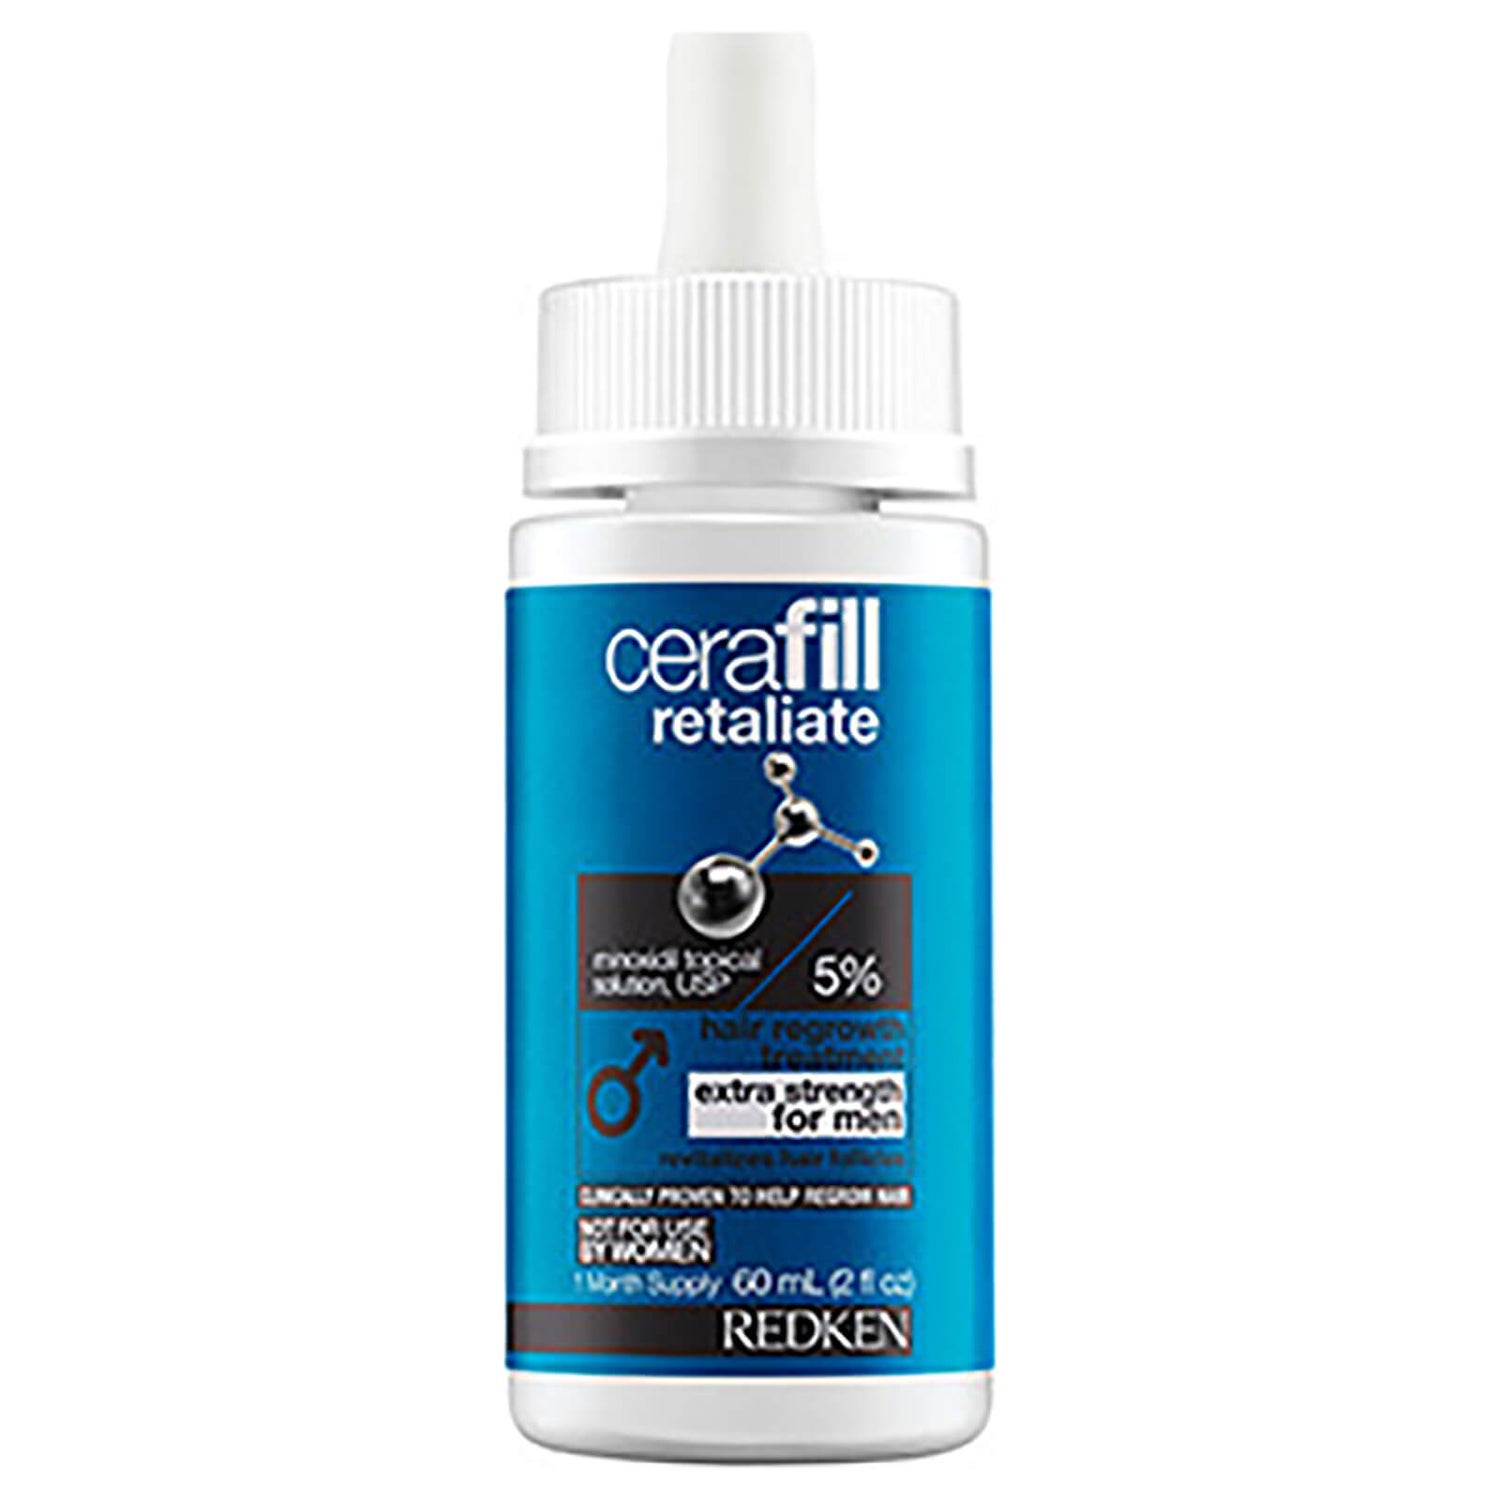 Redken Men's Cerafill Retaliate Minoxidil Topical Solution USP 5% 2oz |  Free US Shipping | lookfantastic